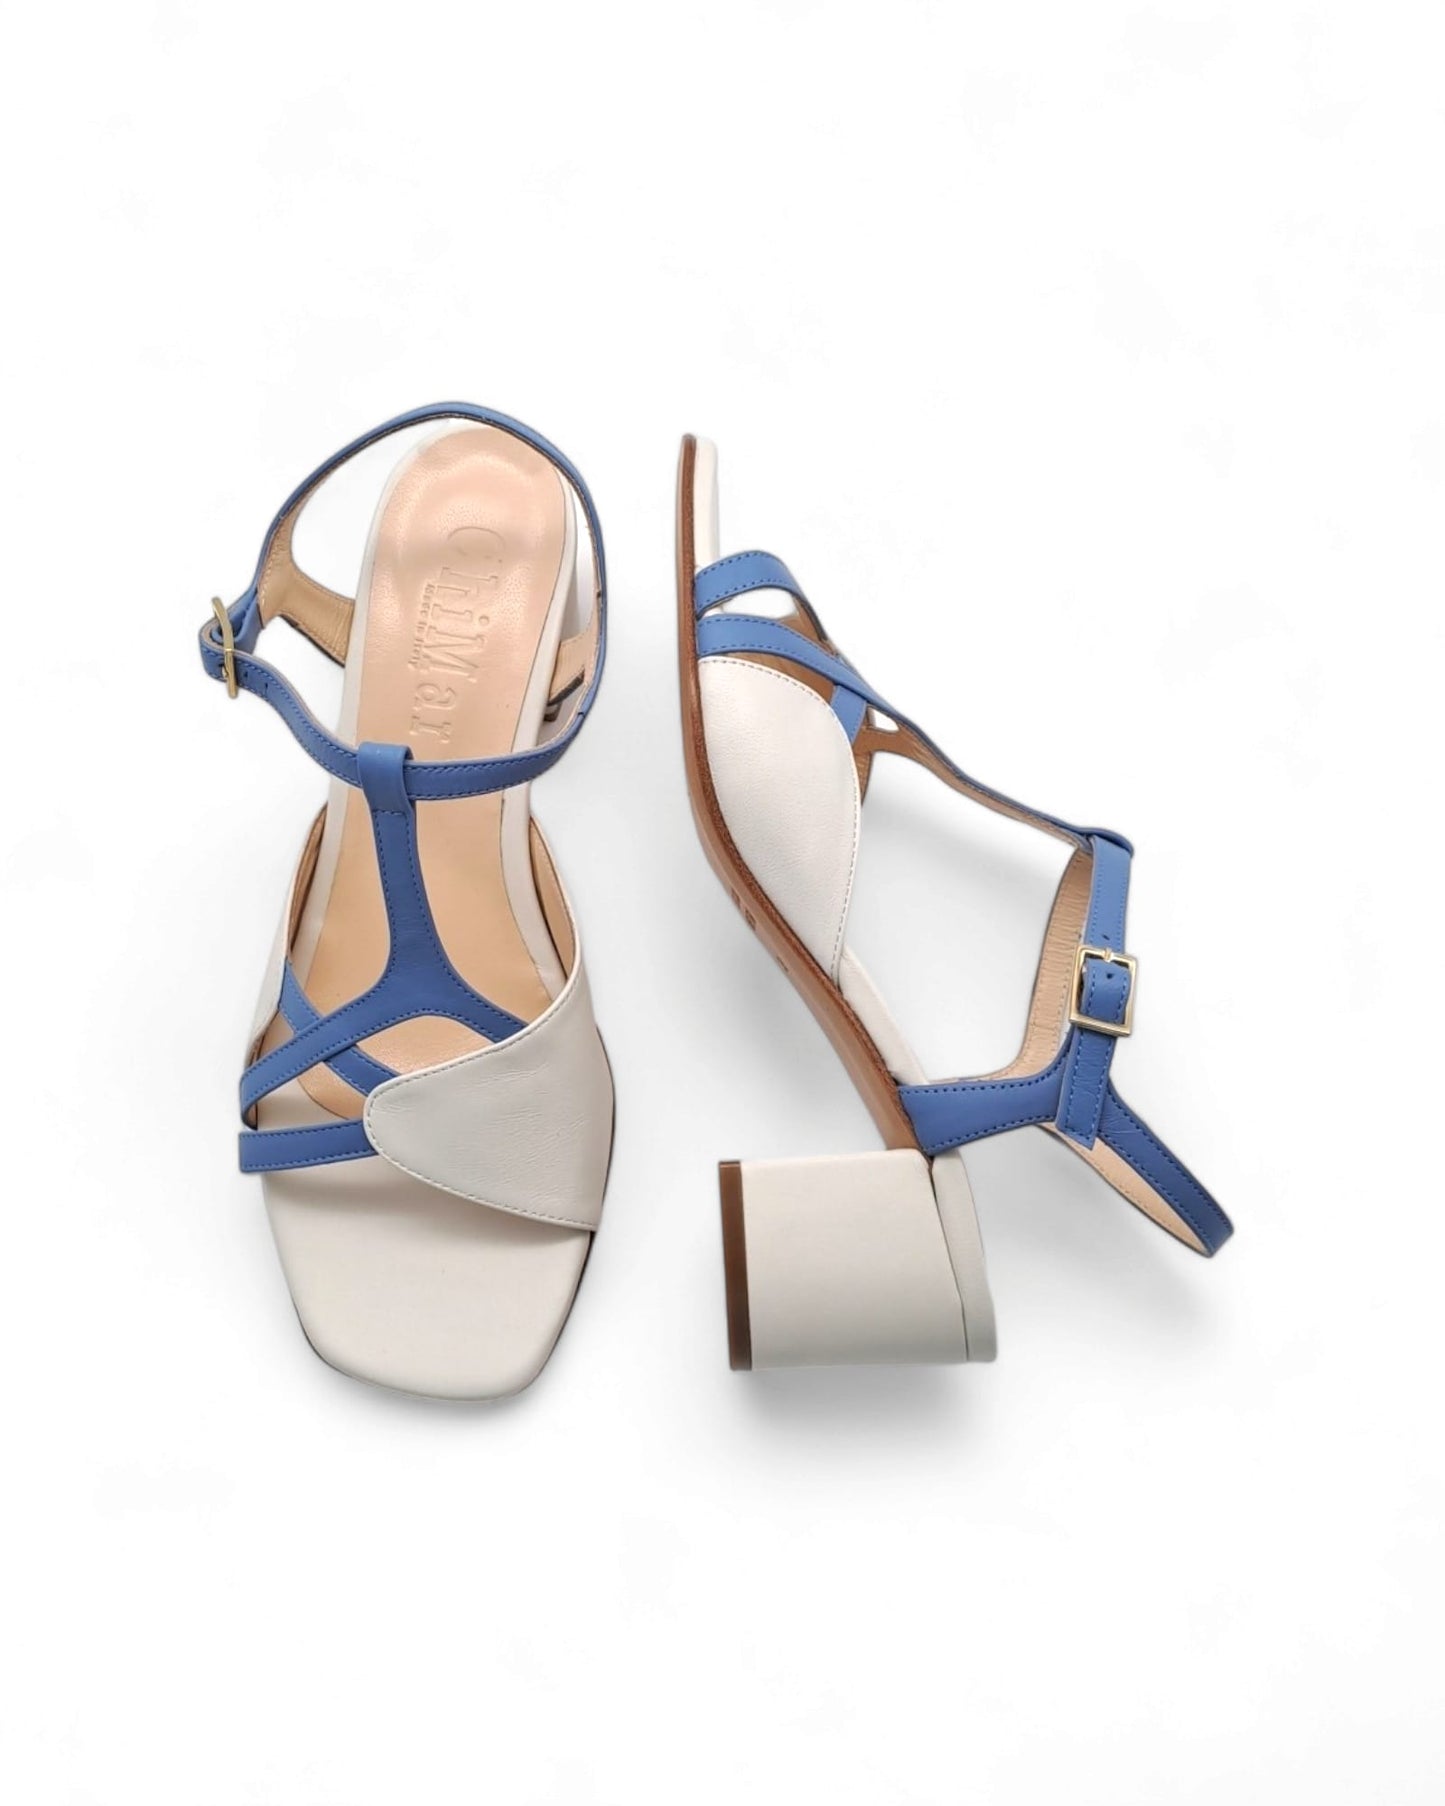 Dolores Nappa Milk/Ruvo sandal